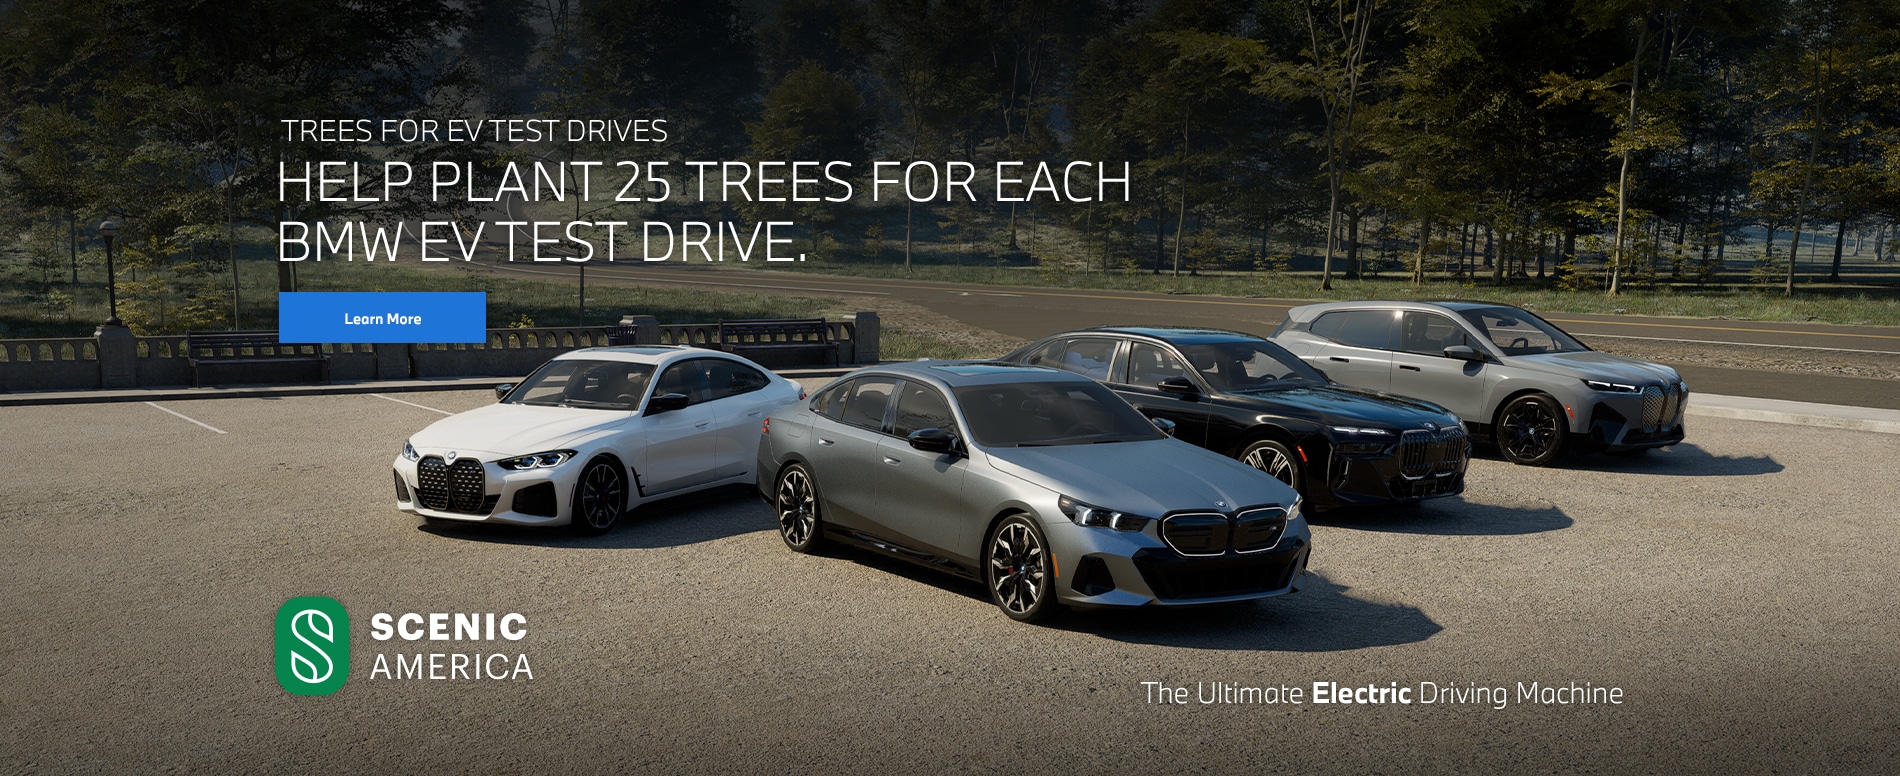 EV Test Drive Trees